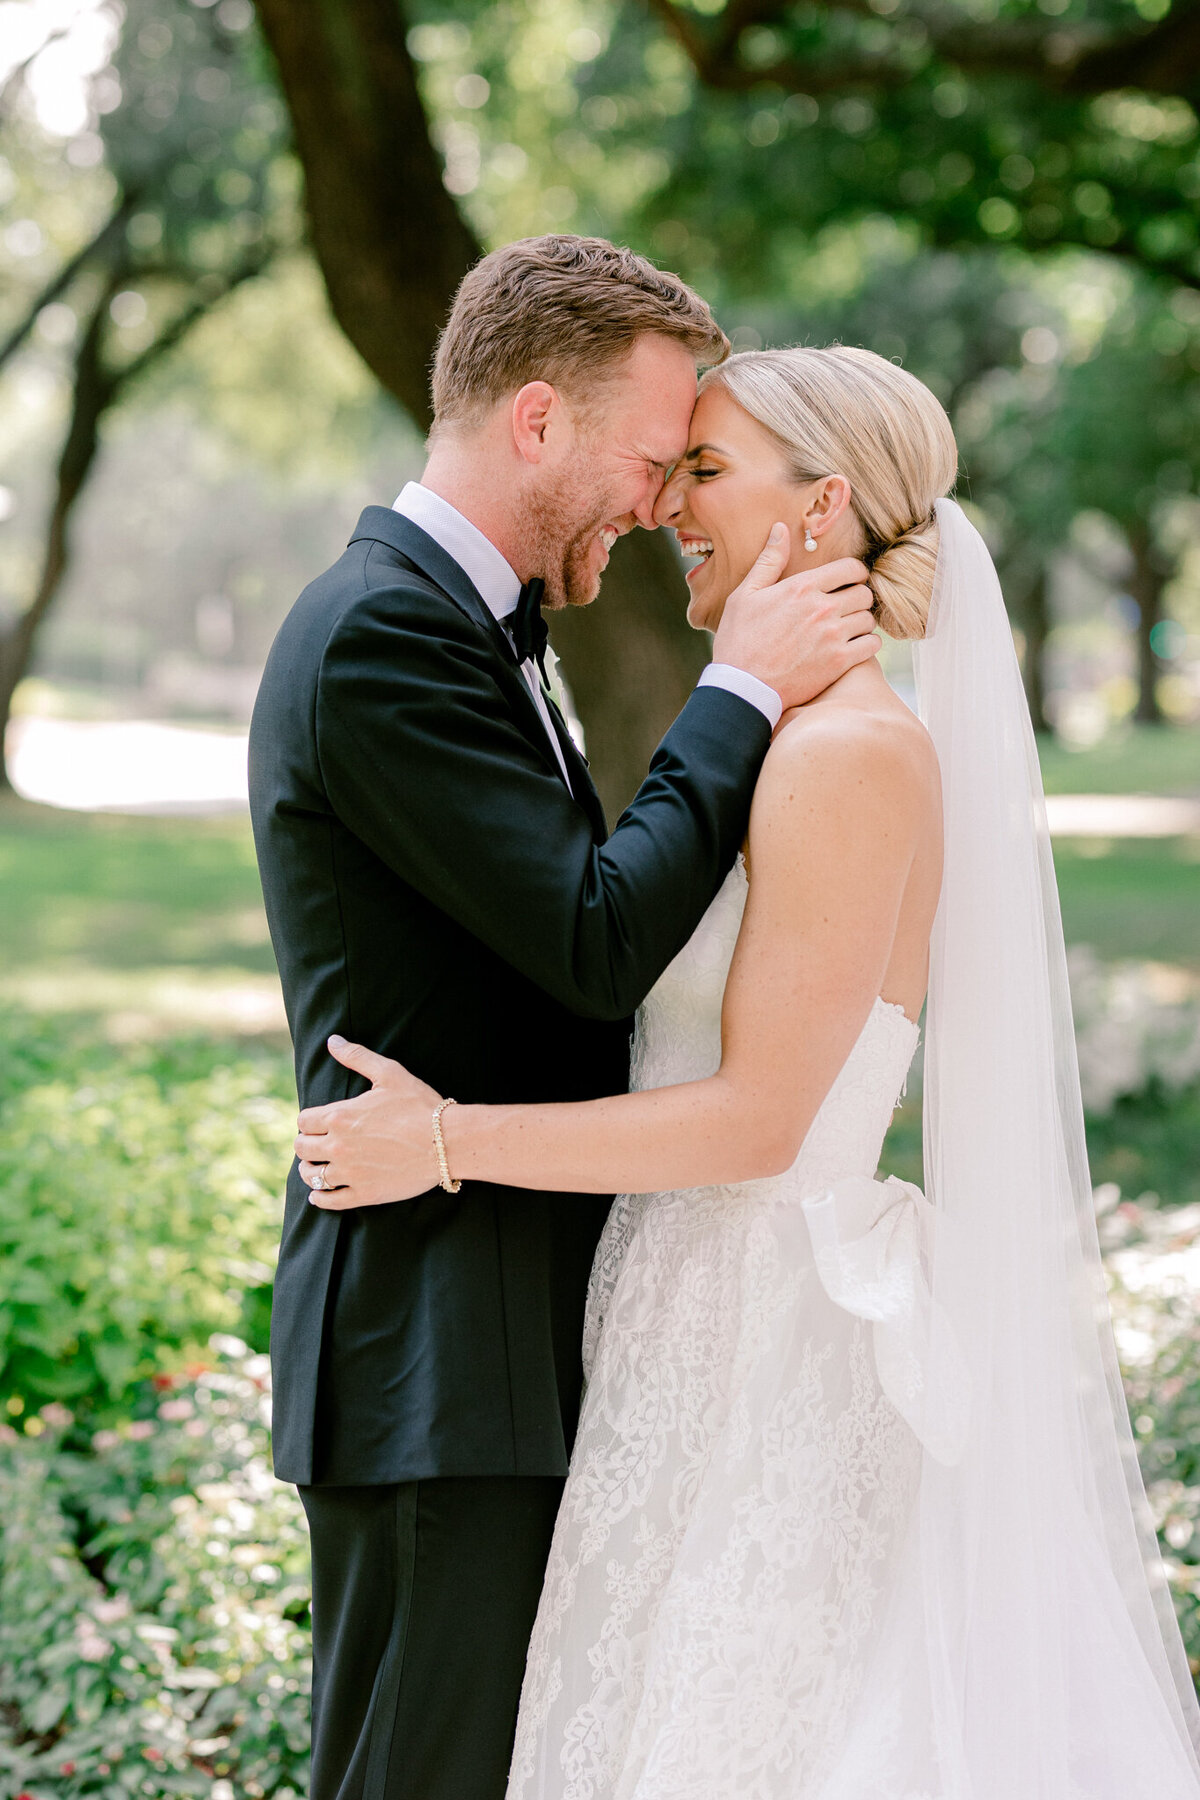 Katelyn & Kyle's Wedding at the Adolphus Hotel | Dallas Wedding Photographer | Sami Kathryn Photography-210